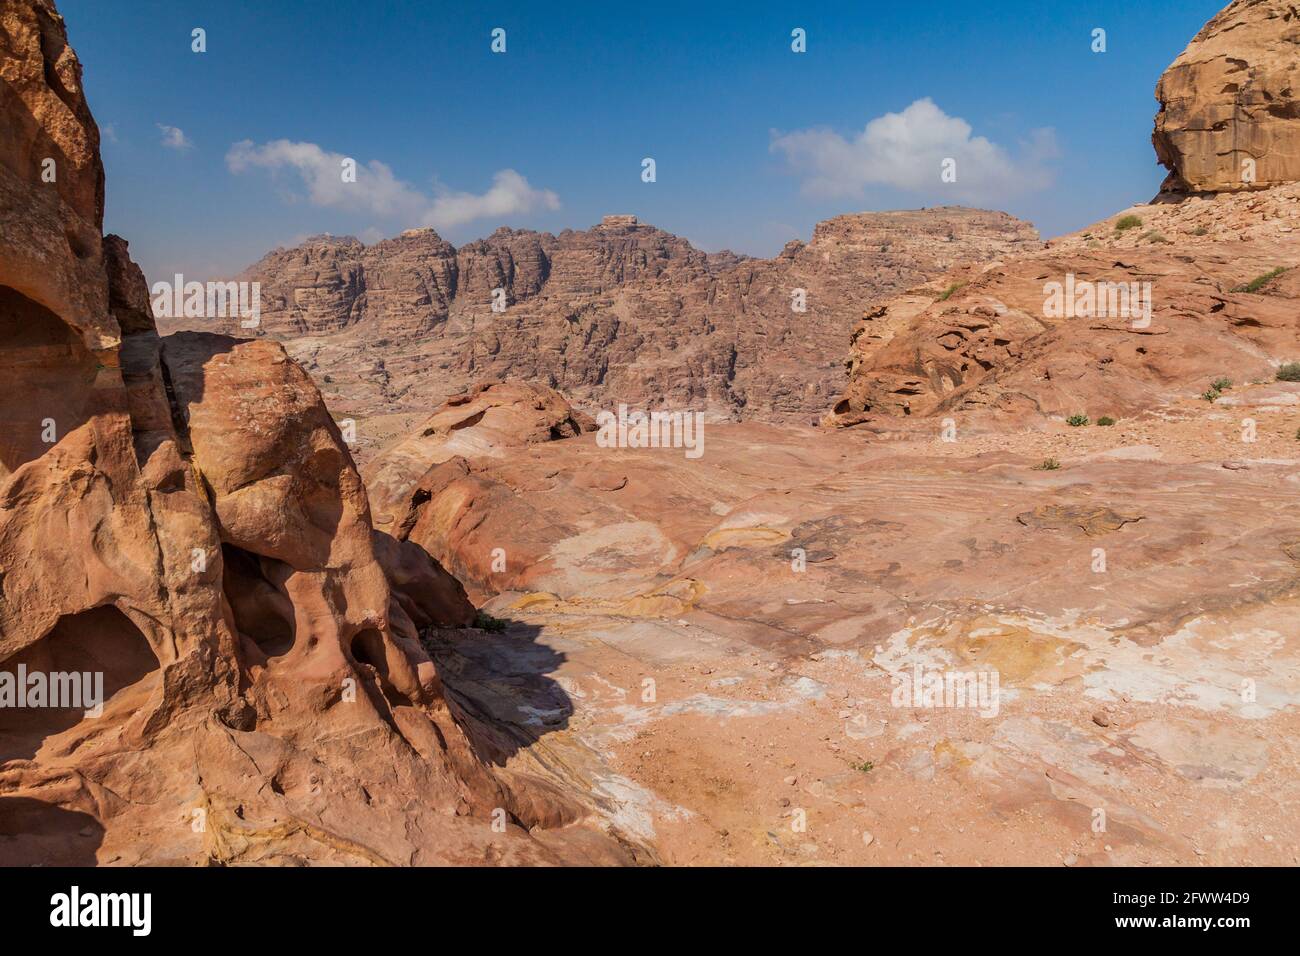 Landscape of the ancient city Petra, Jordan Stock Photo